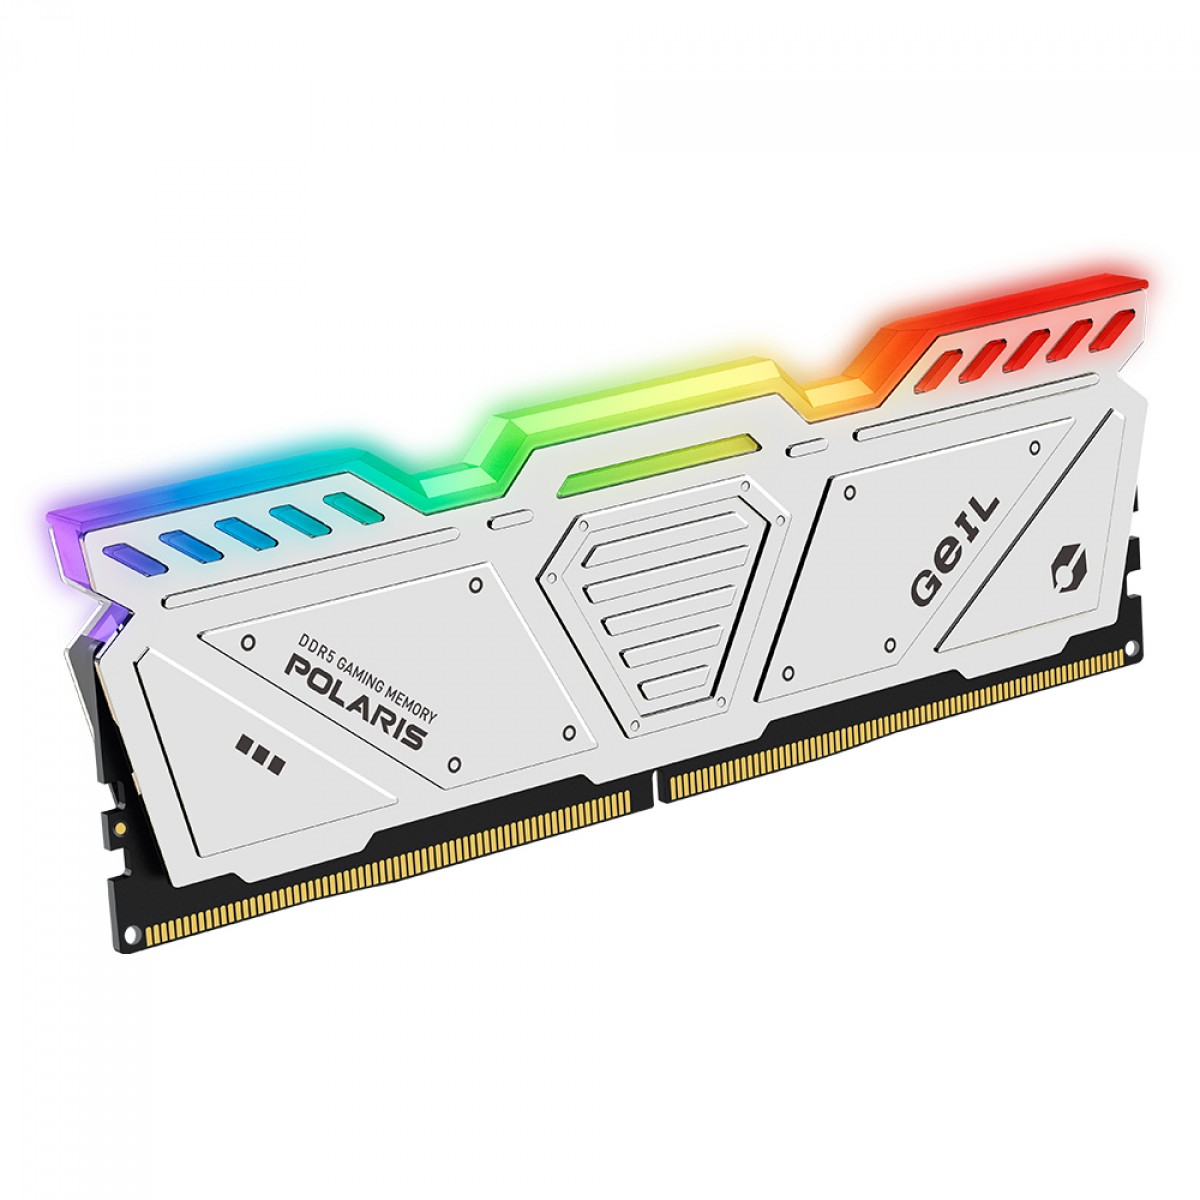 Memória DDR5 Geil Polaris RGB, 8GB 4800MHz, White, GOSW58GB4800C40SC